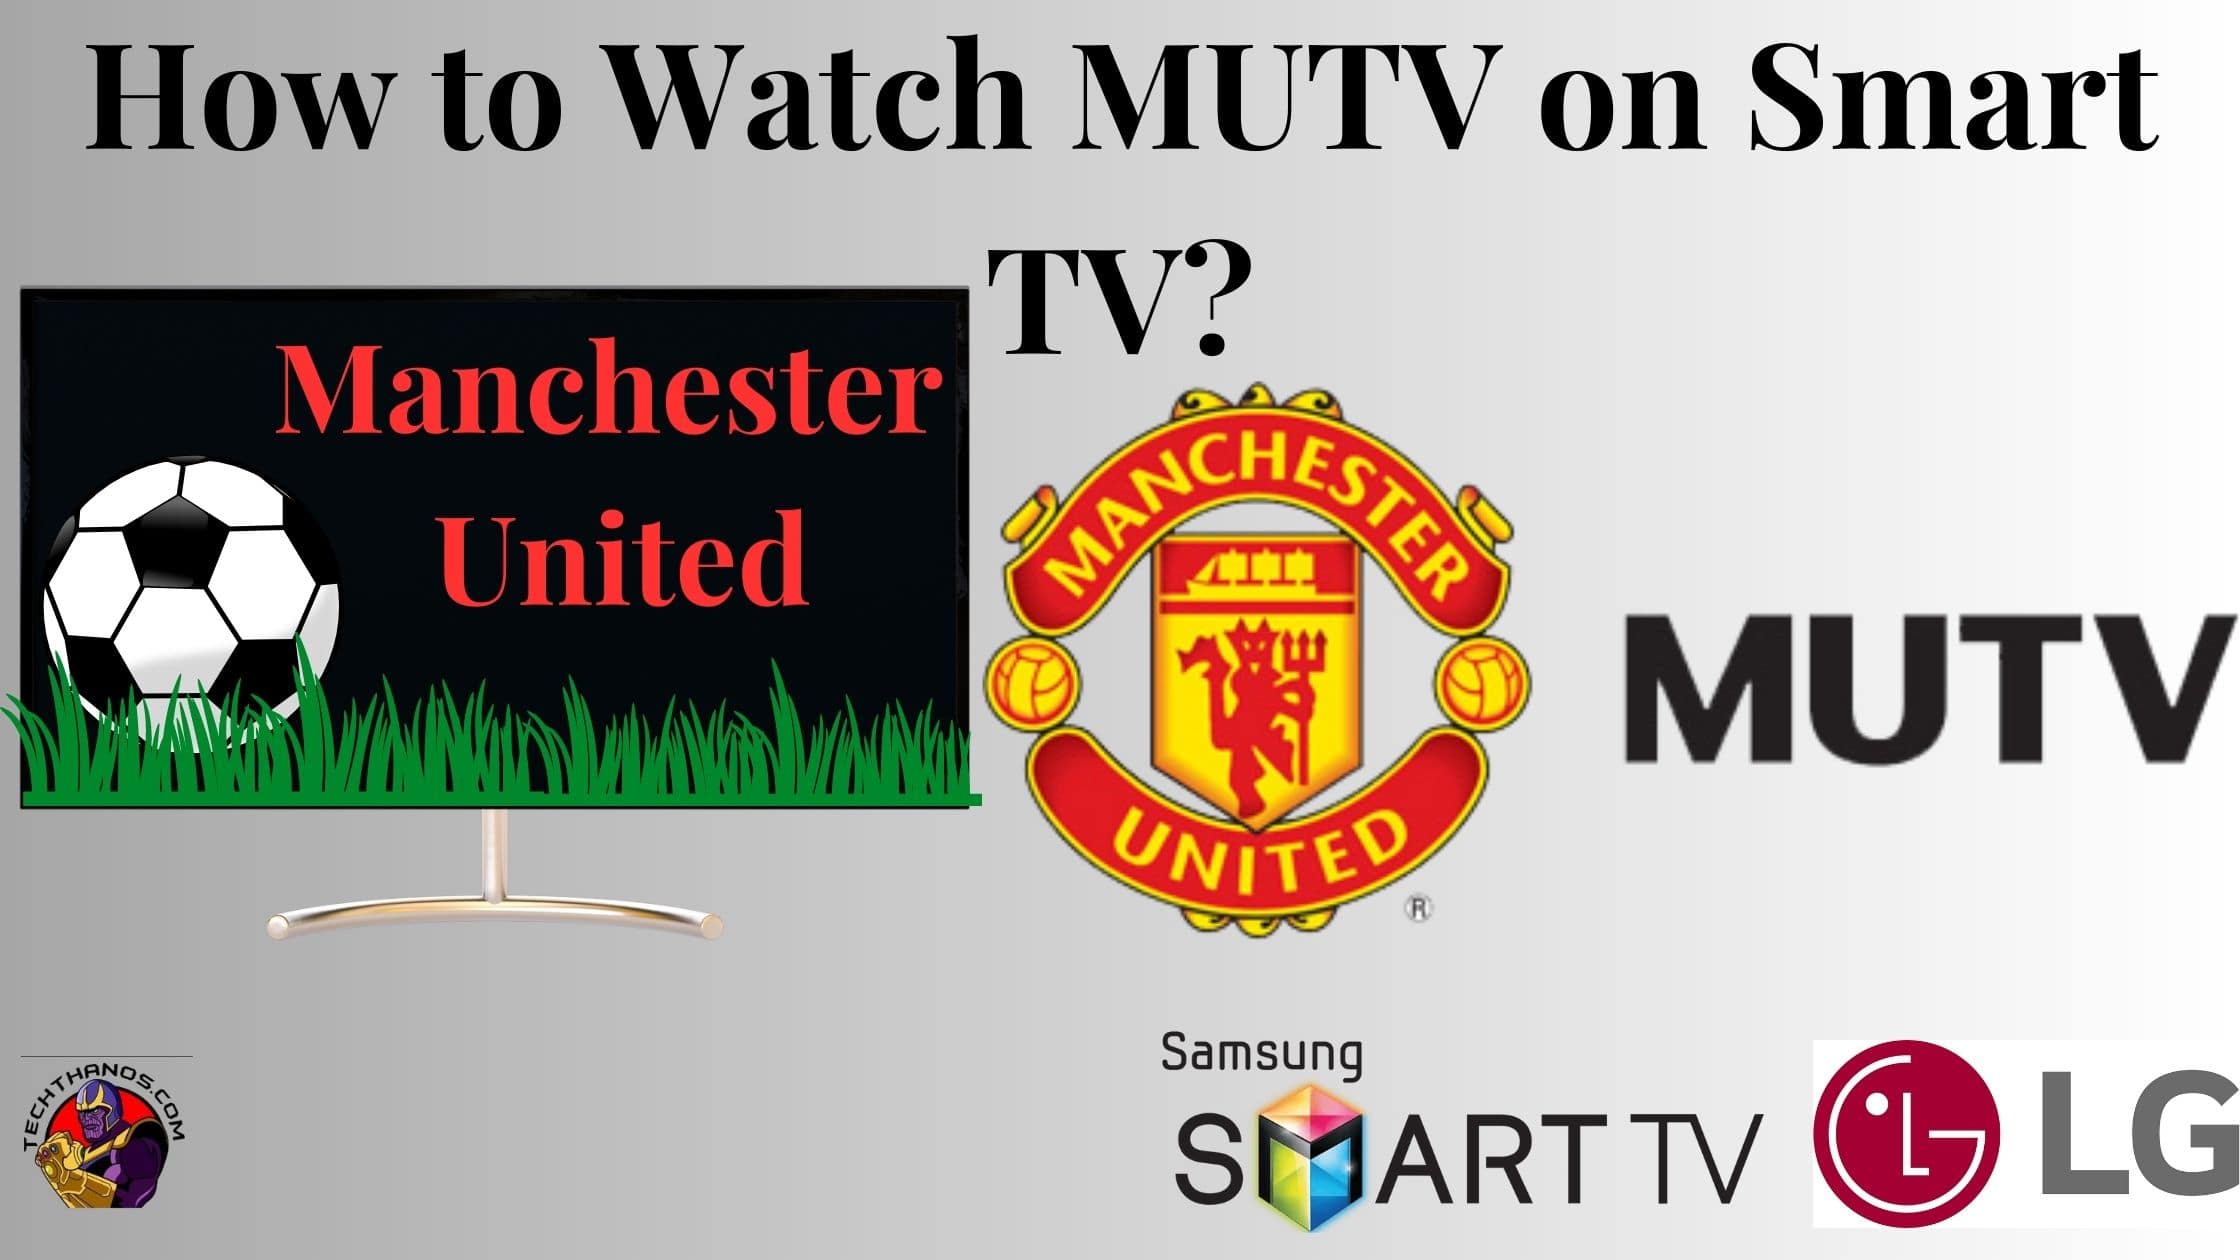 How to Watch MUTV on Smart TV